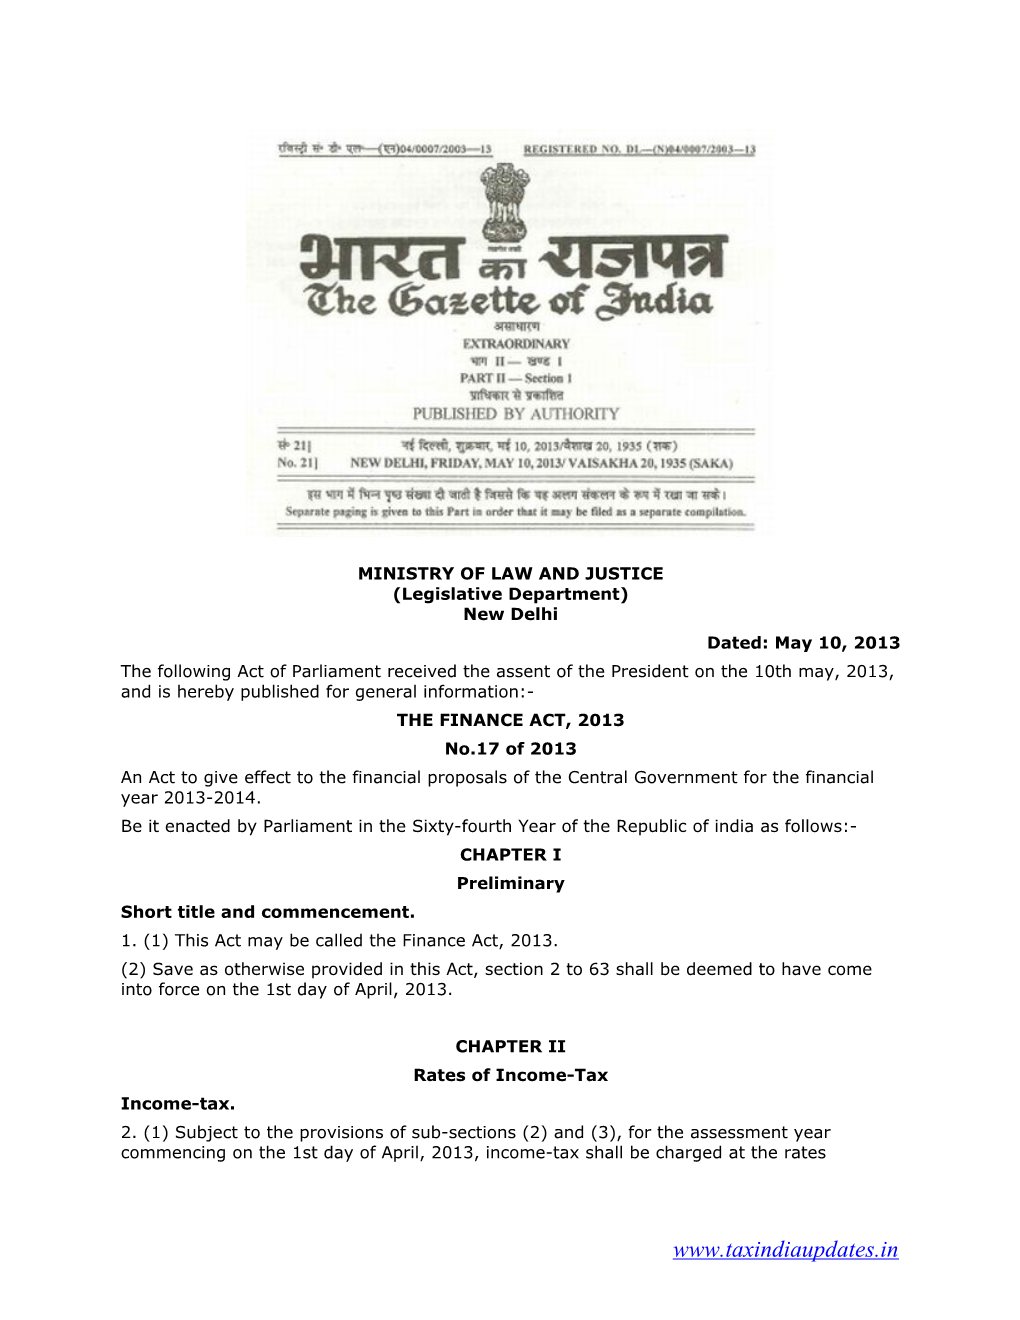 MINISTRY of LAW and JUSTICE (Legislative Department) New Delhi